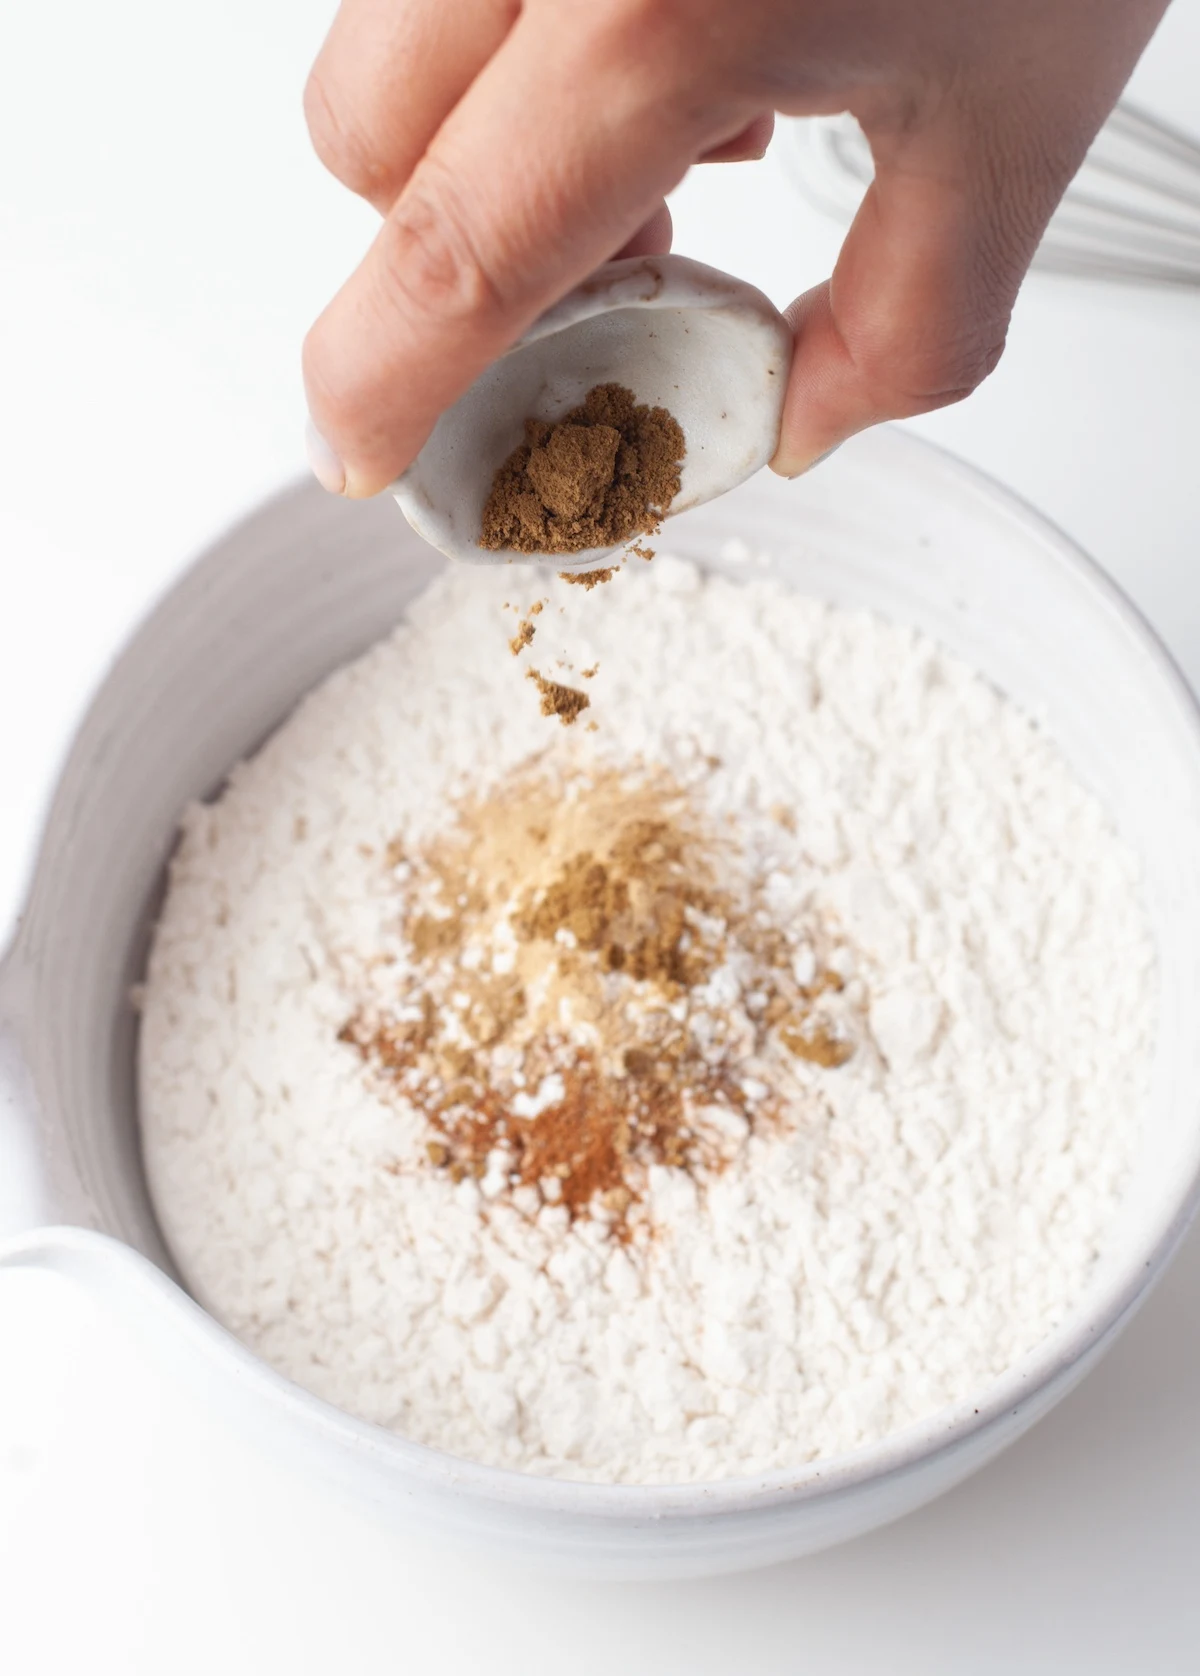 Combining flour, baking powder, baking soda, cinnamon, ginger, nutmeg, and salt in a medium bowl